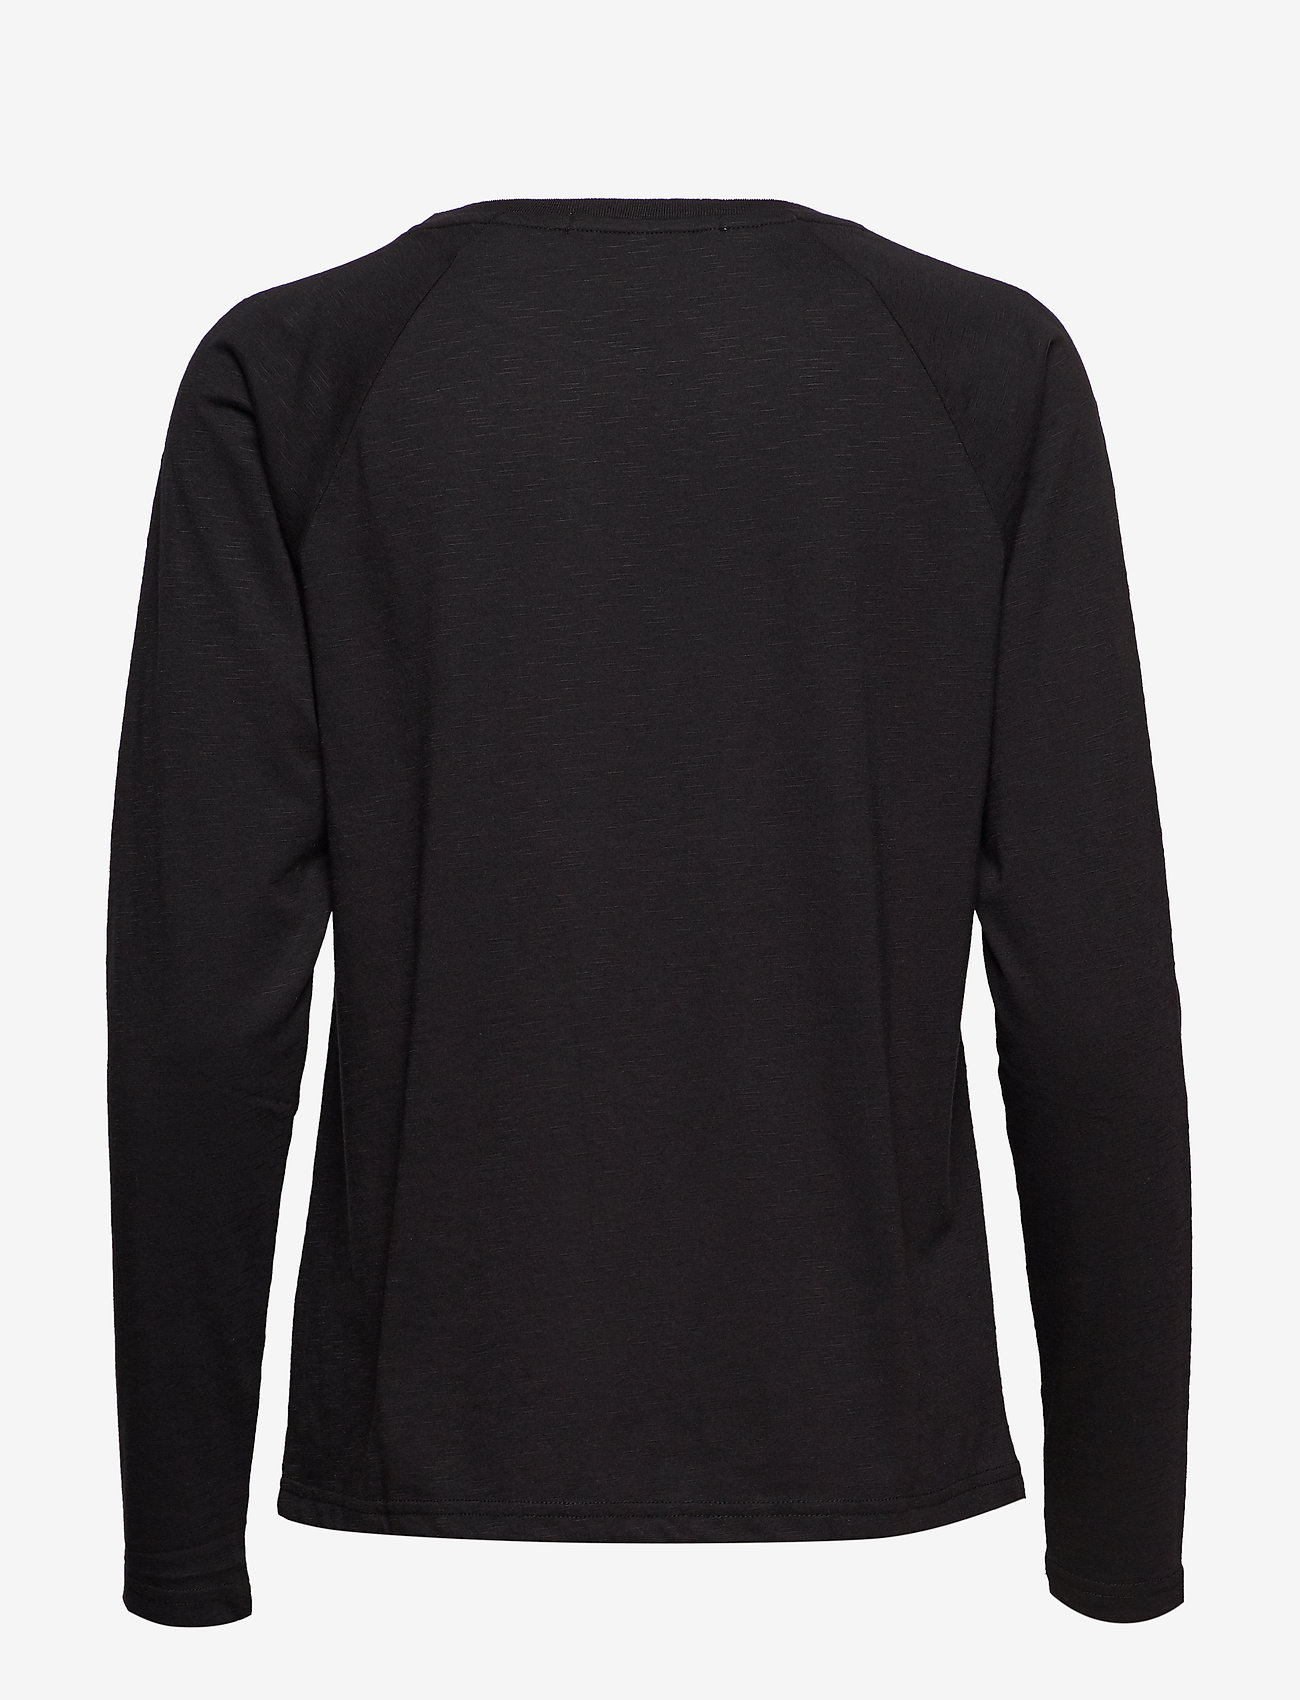 Coster Copenhagen - CC Heart long sleeve t-shirt - mažiausios kainos - black - 1